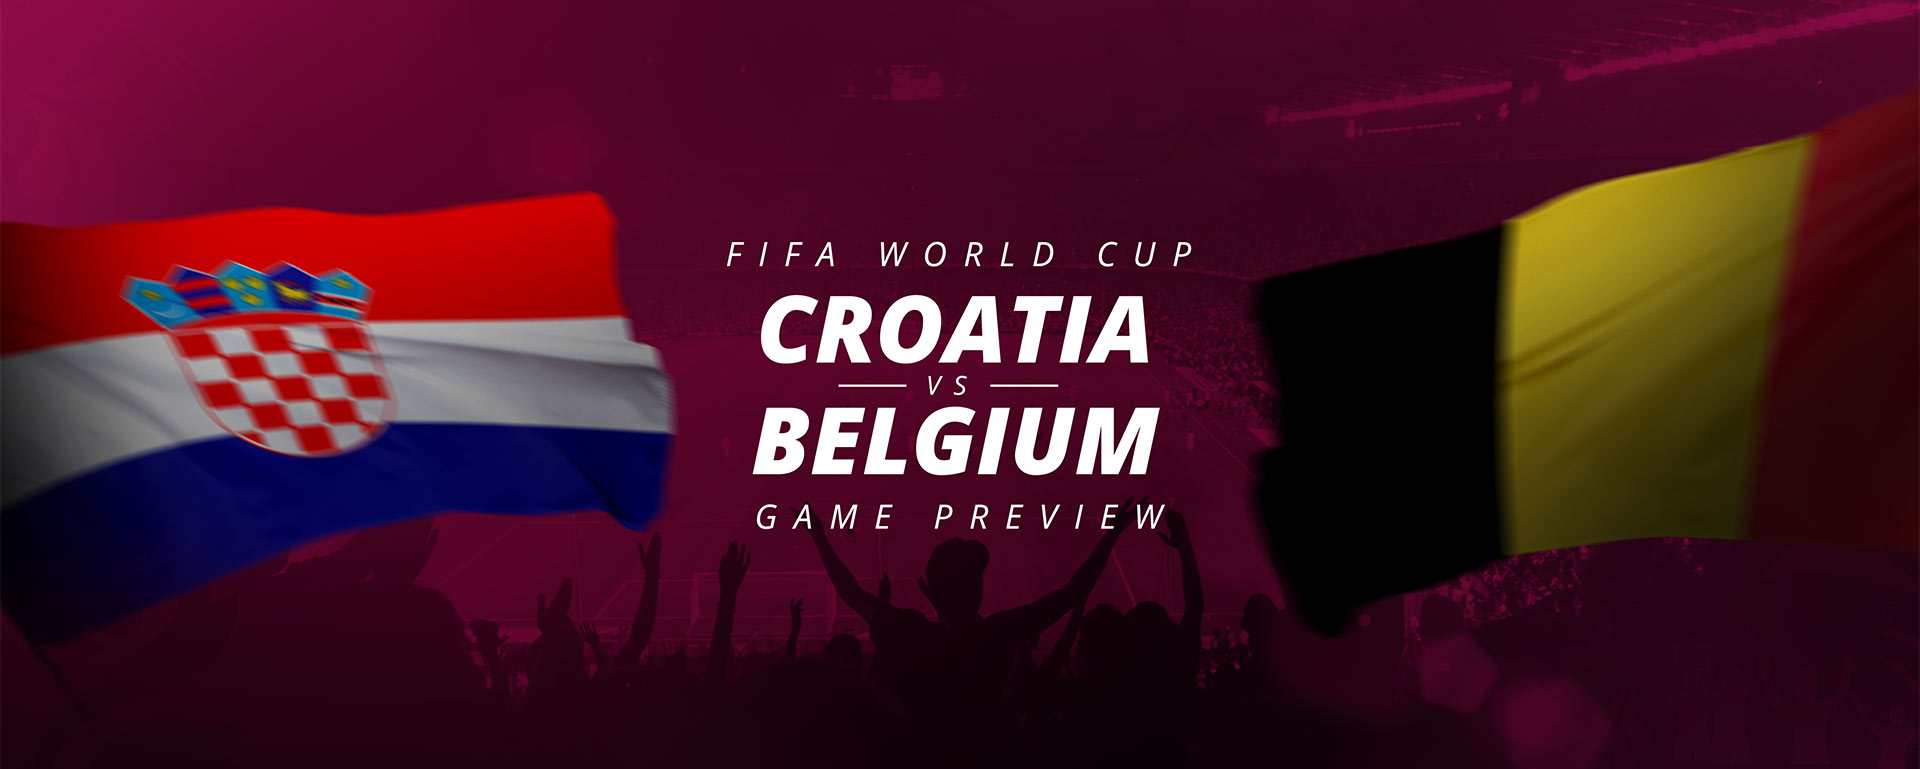 FIFA WORLD CUP: CROATIA V BELGIUM – GAME PREVIEW